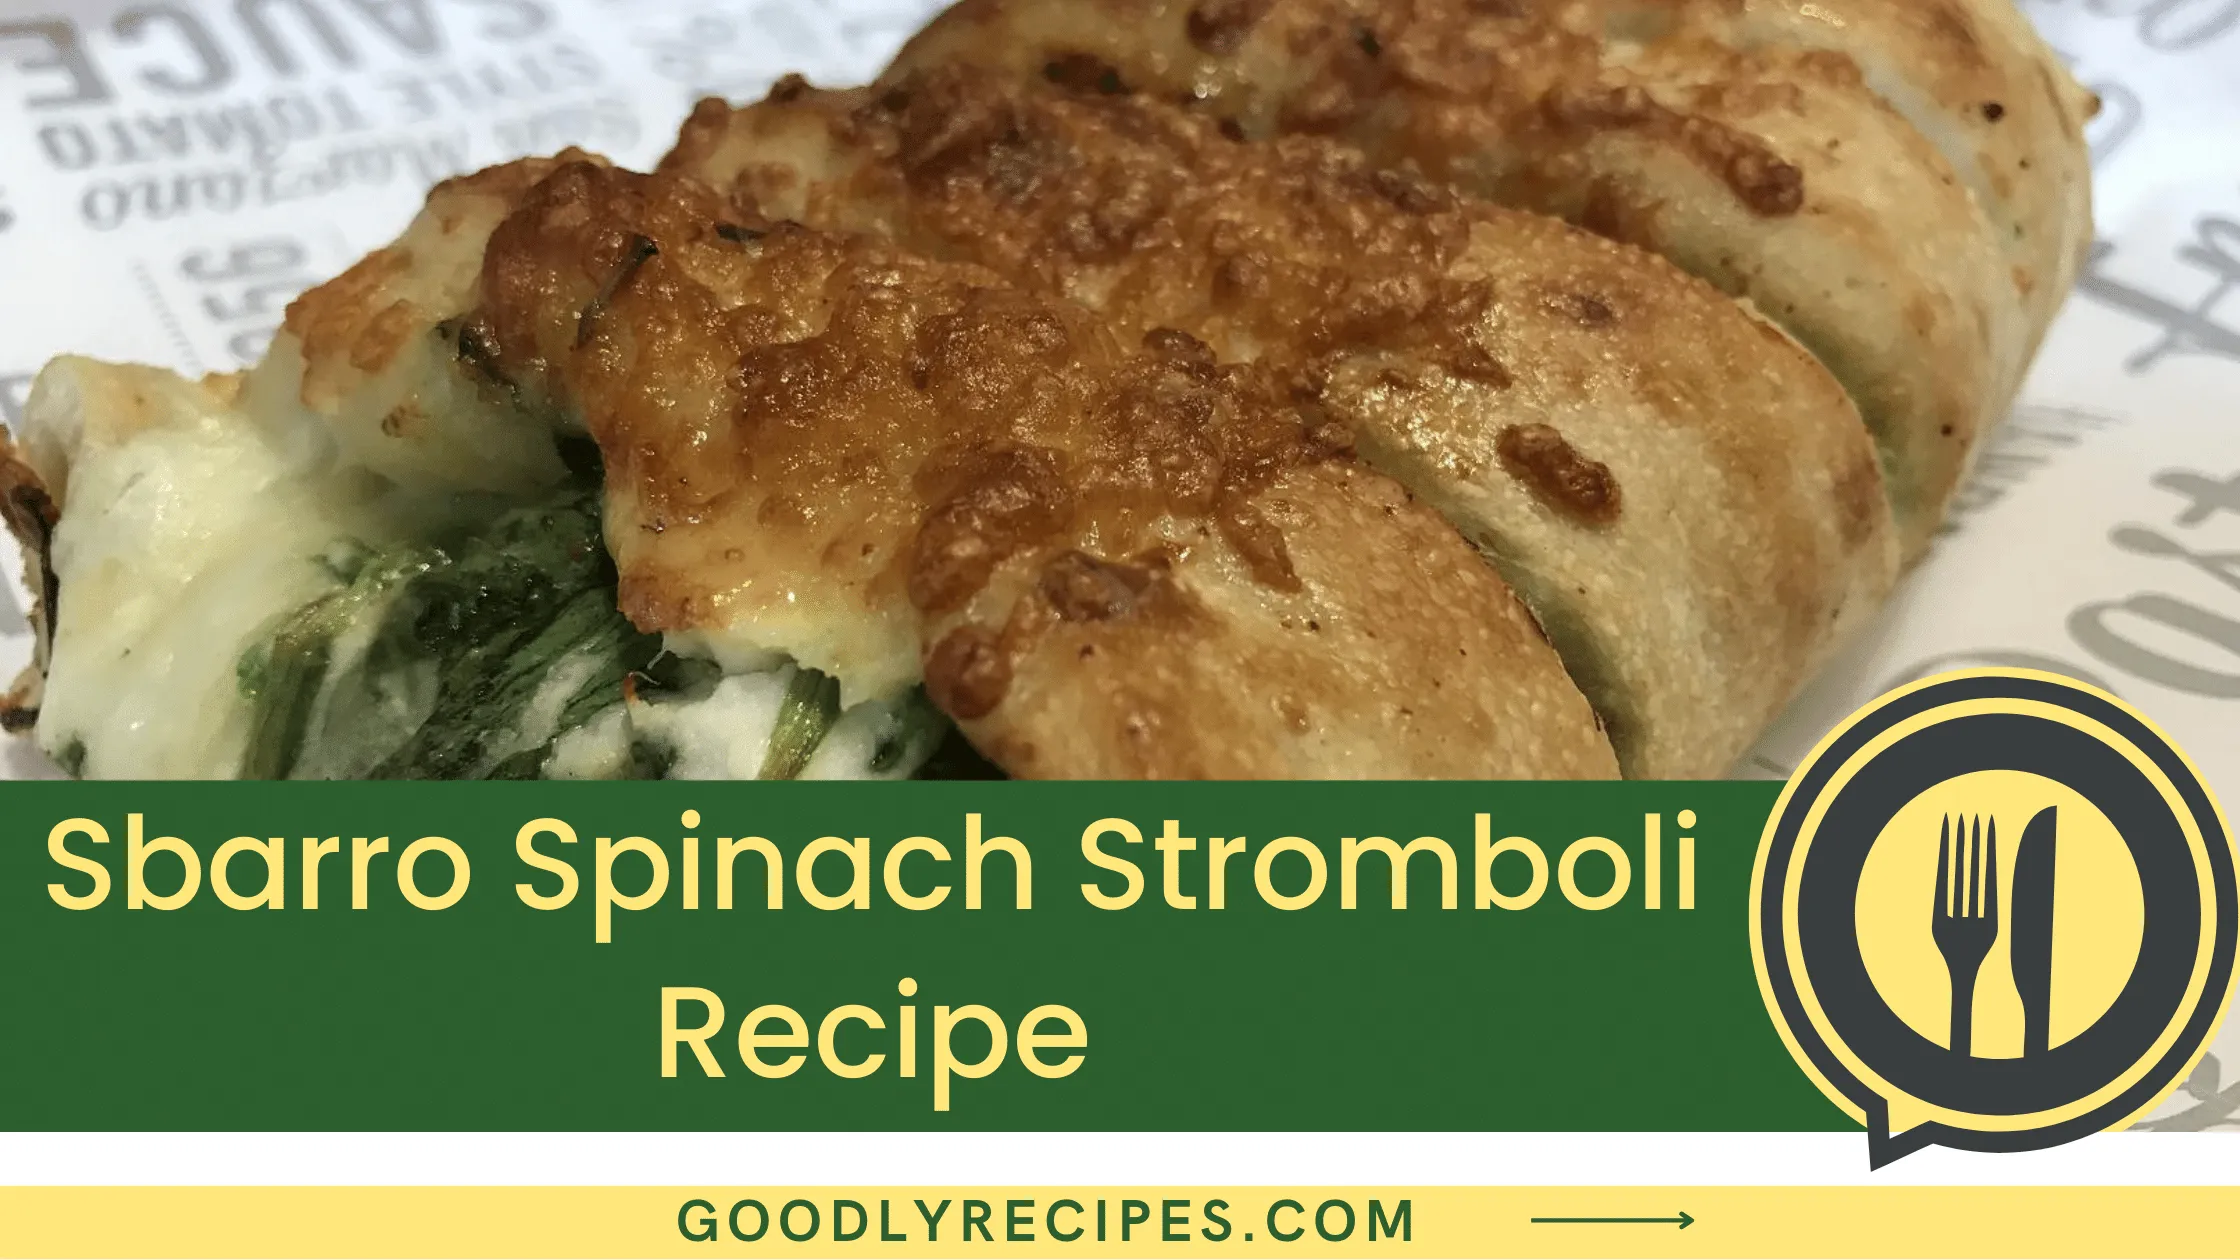 What is Sbarro Spinach Stromboli?